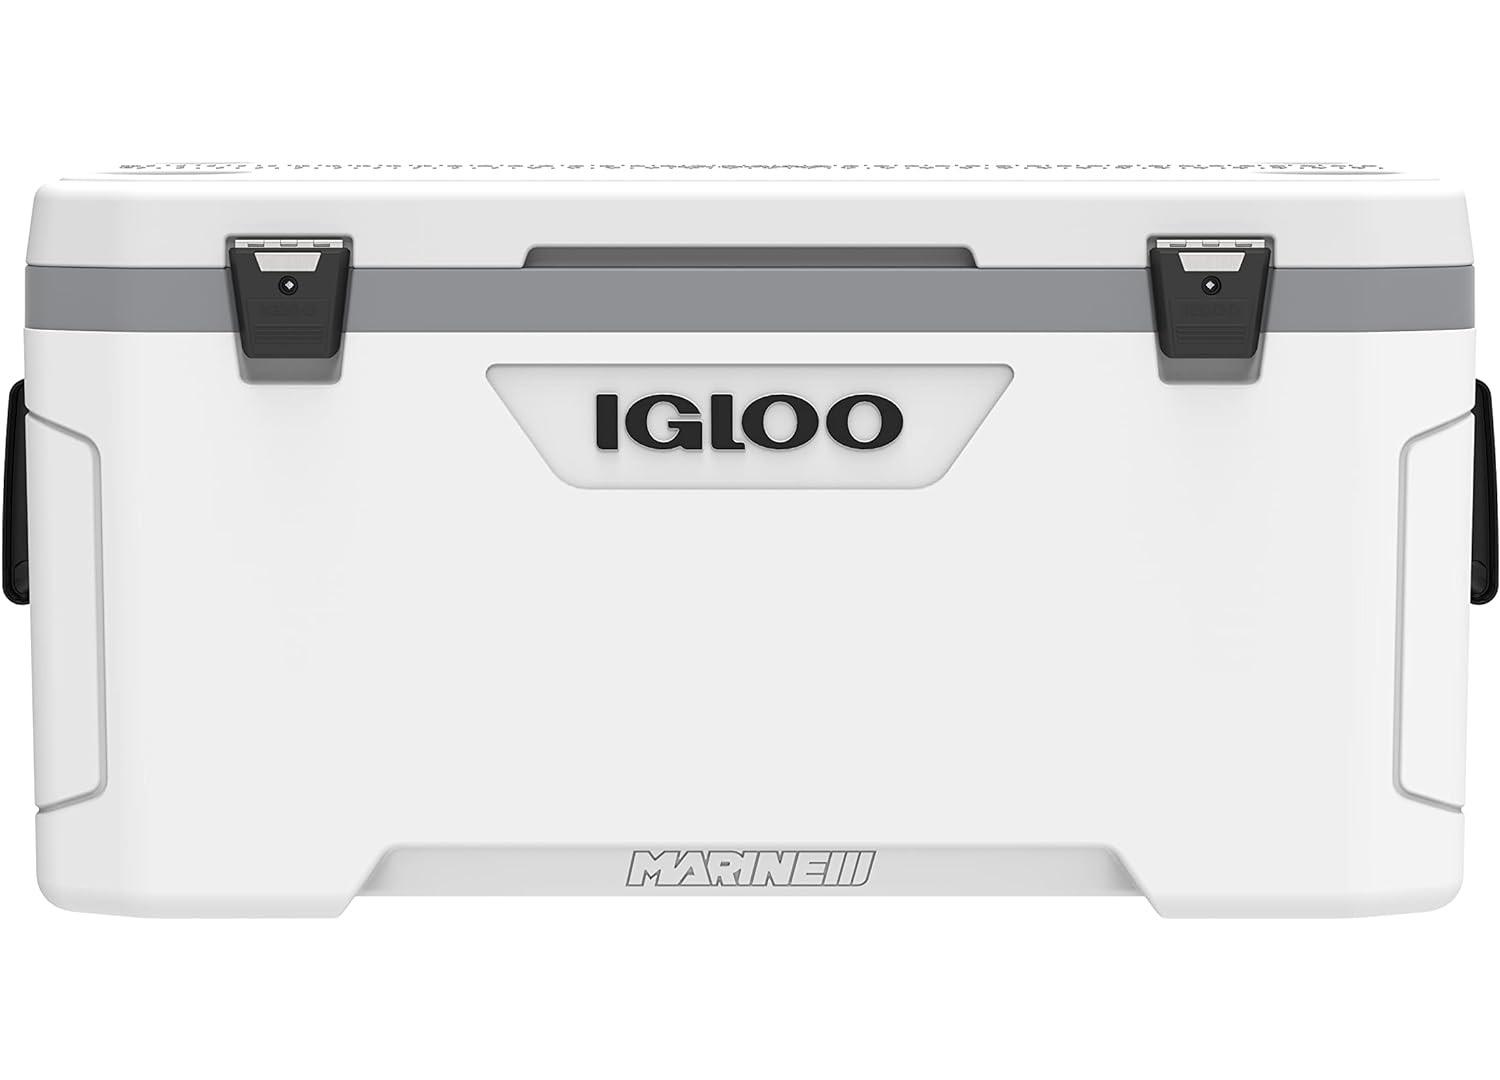 Igloo 100q Latitude Marine Ultra Hard-Sided Cooler for $71.99 Shipped